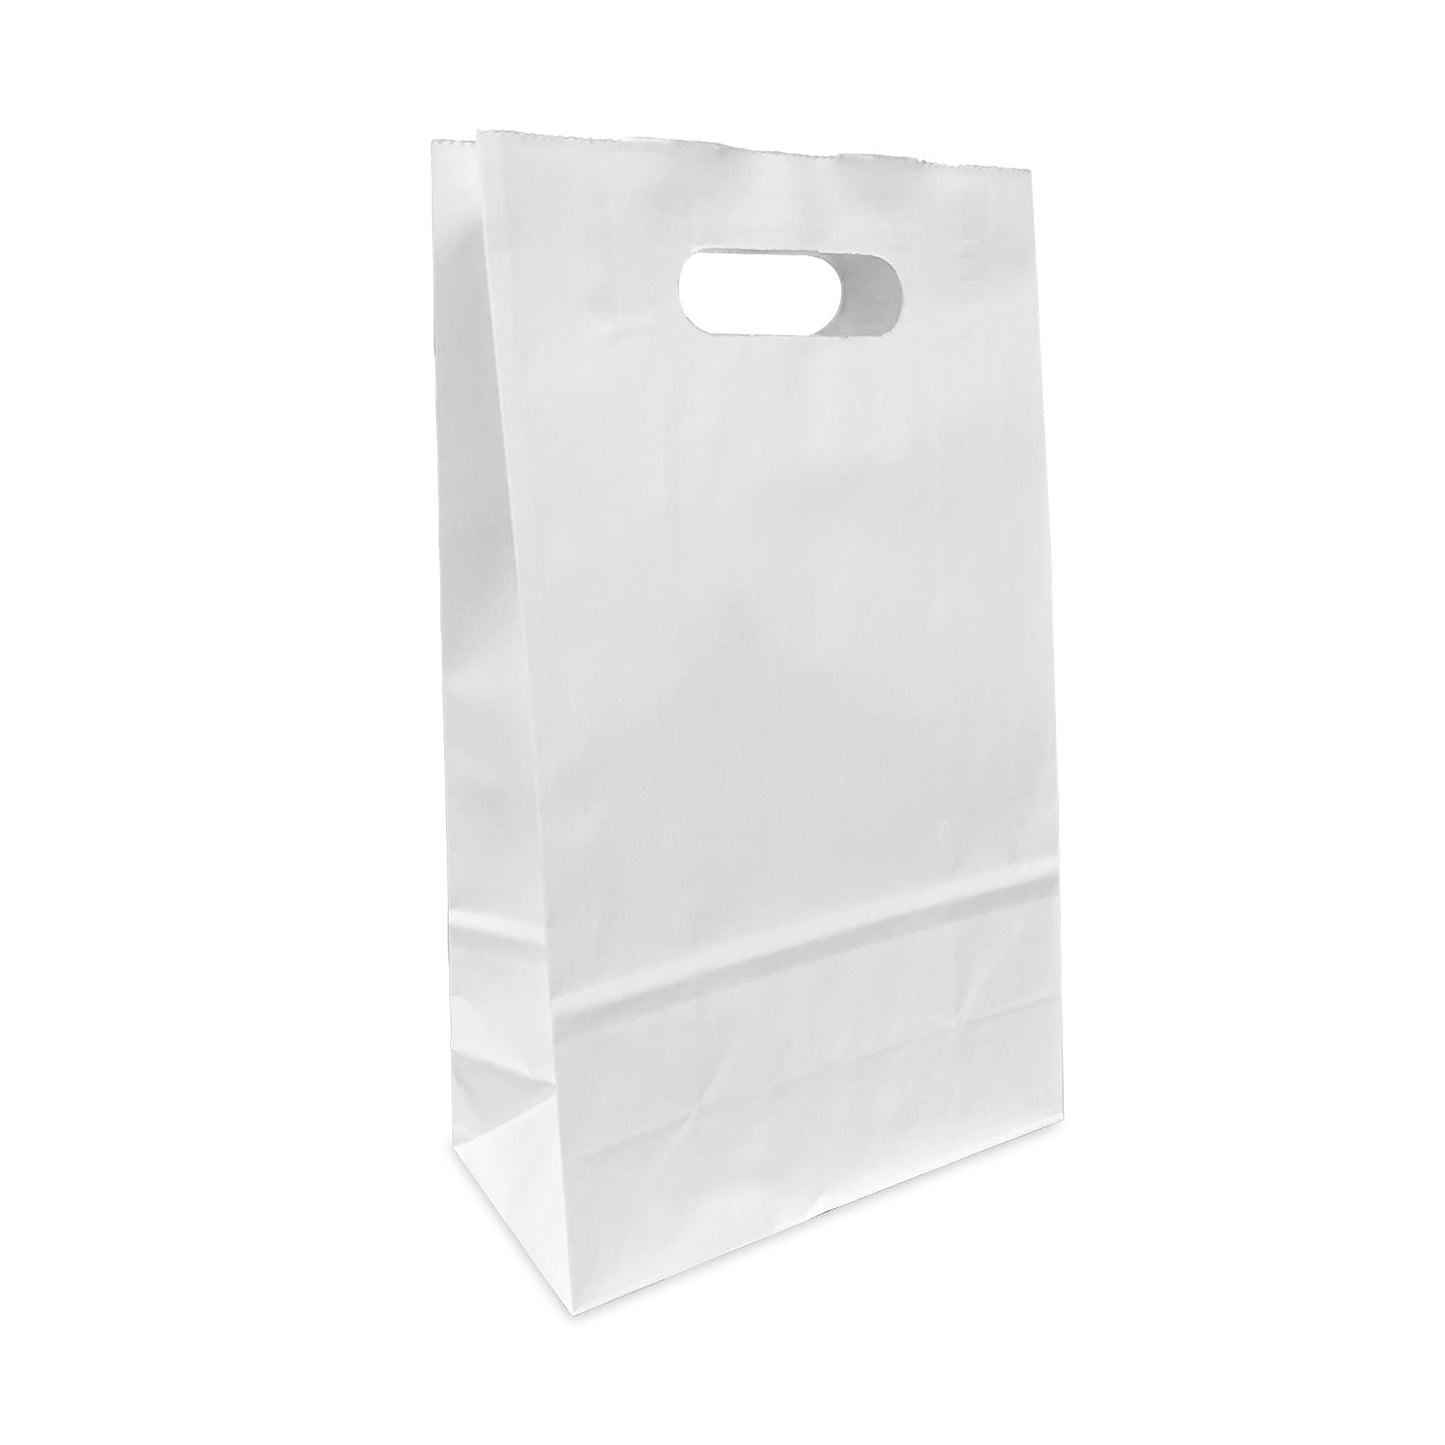 250pcs, Pub, 8x4x13 5/8 inches, White Paper Bags, with Die Cut Handles